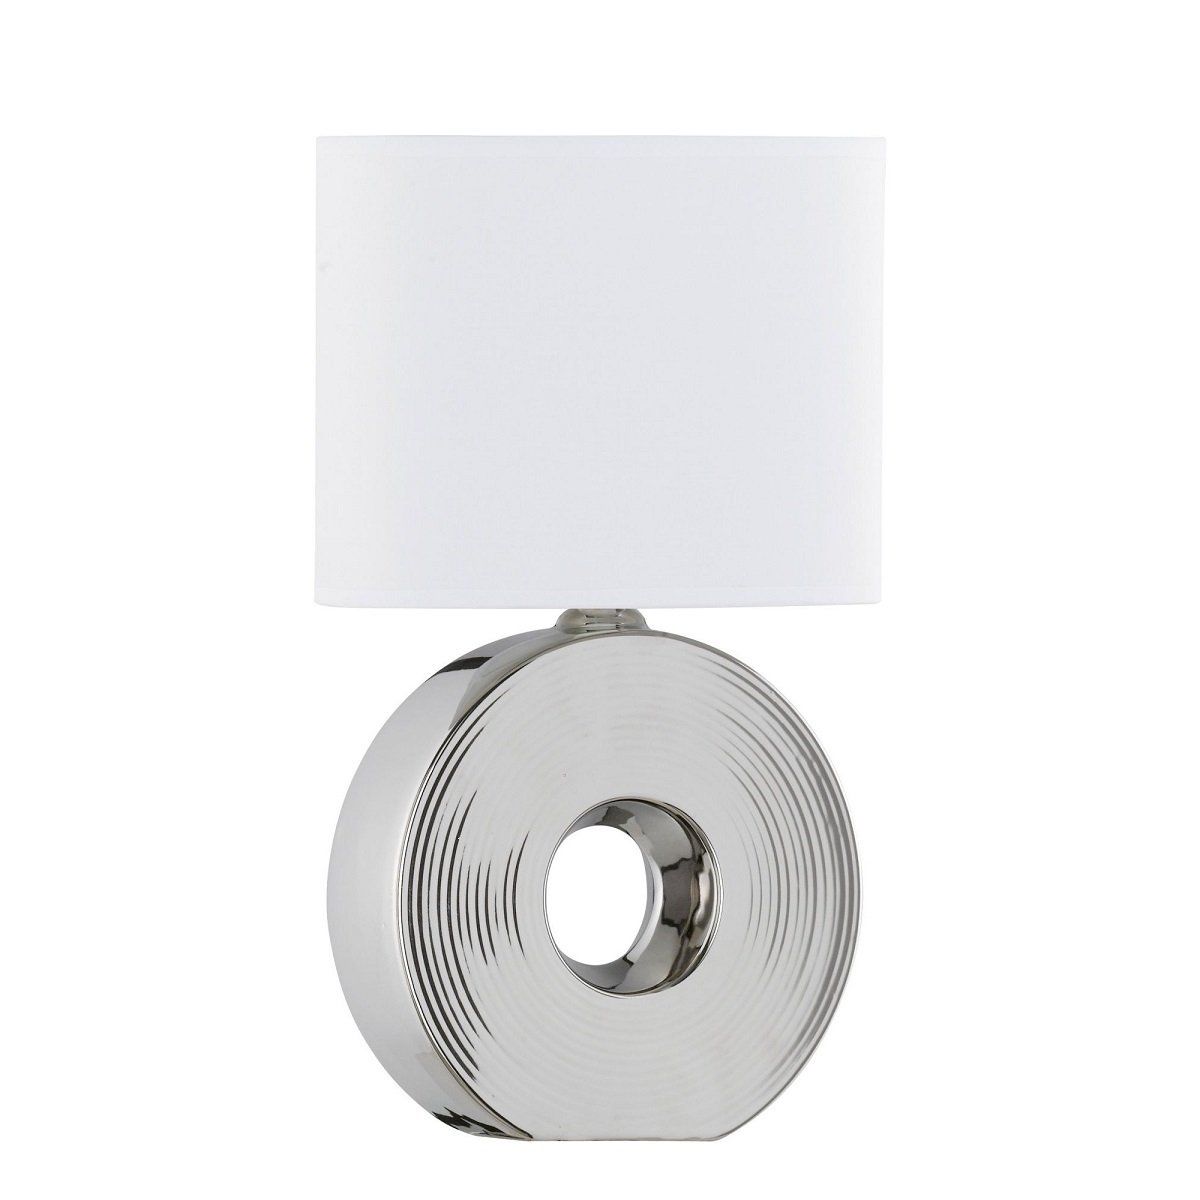 Lampe de salon design EYE argentée en métal